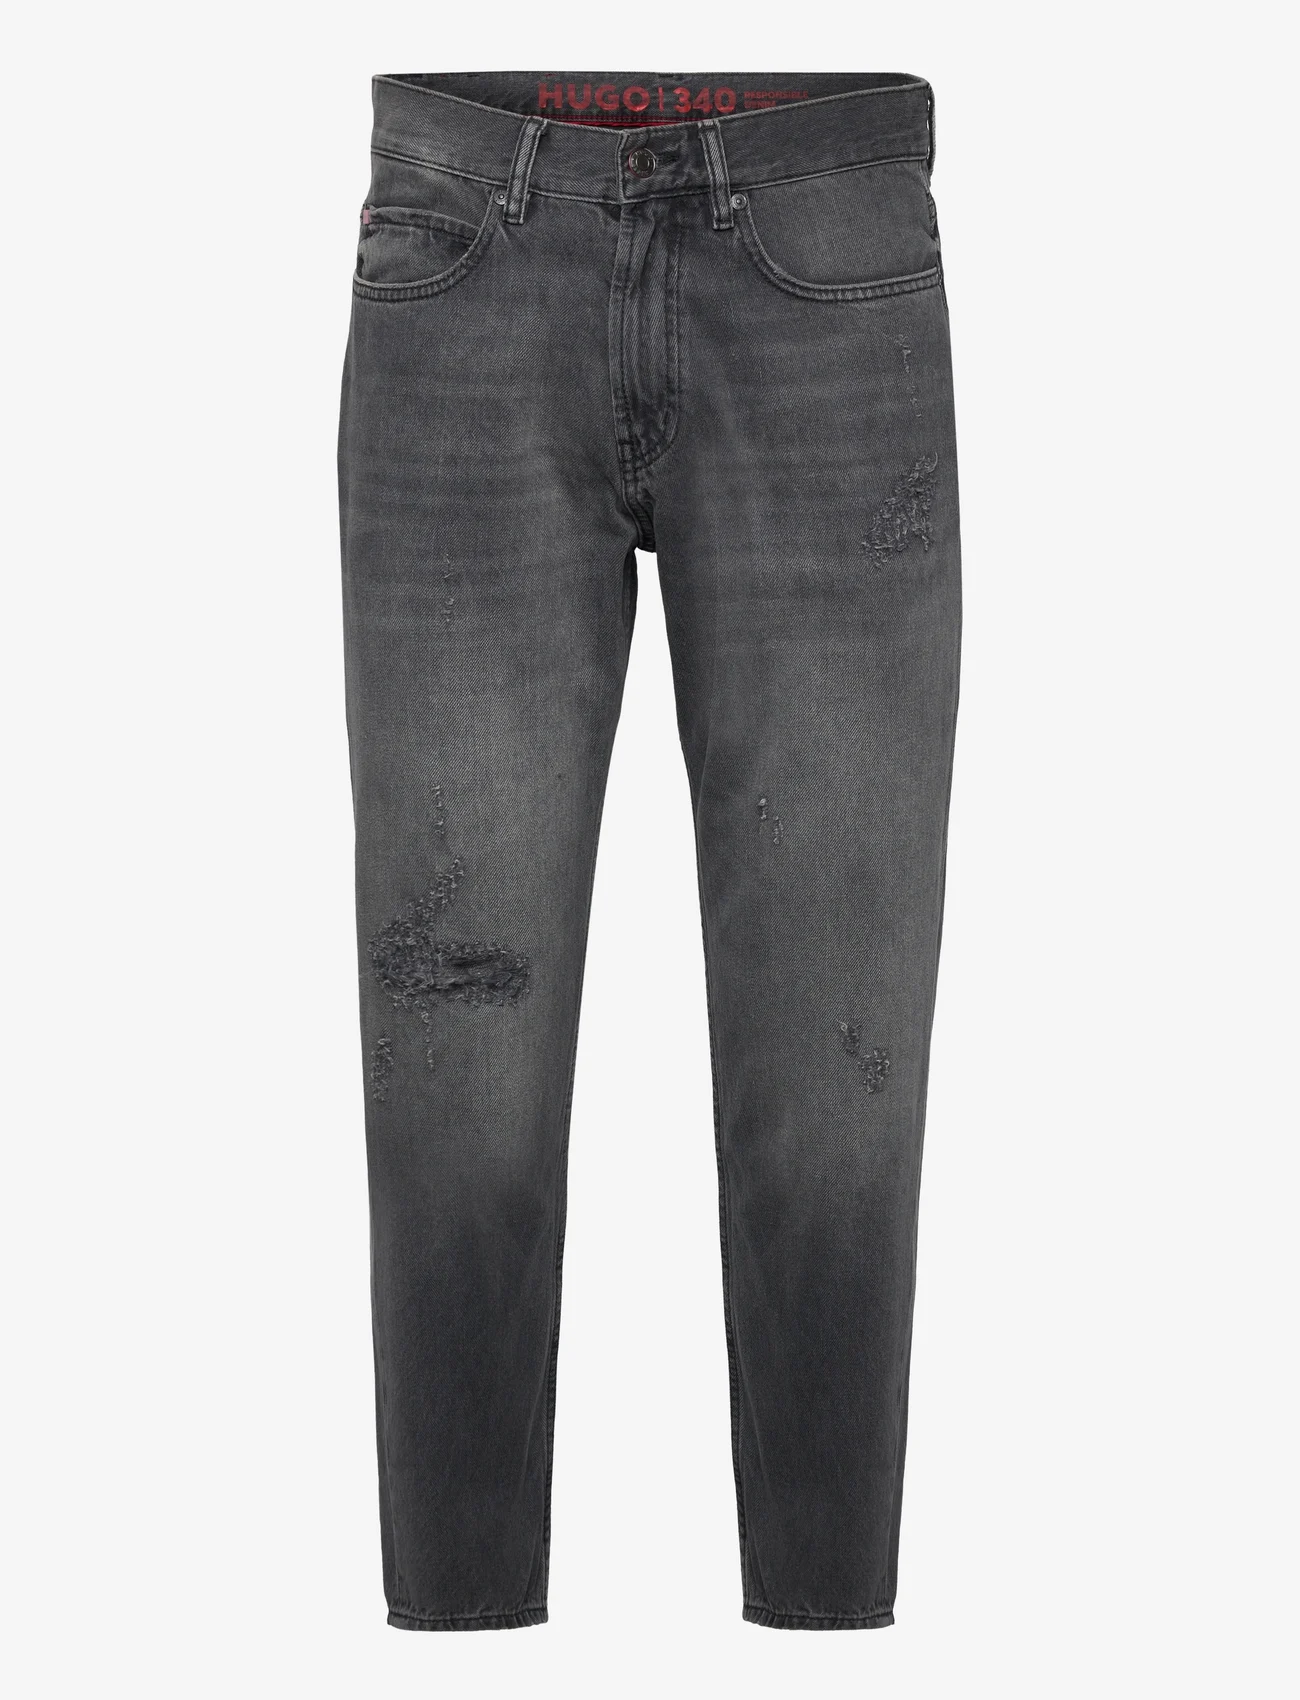 HUGO - HUGO 340 - loose jeans - medium grey - 0